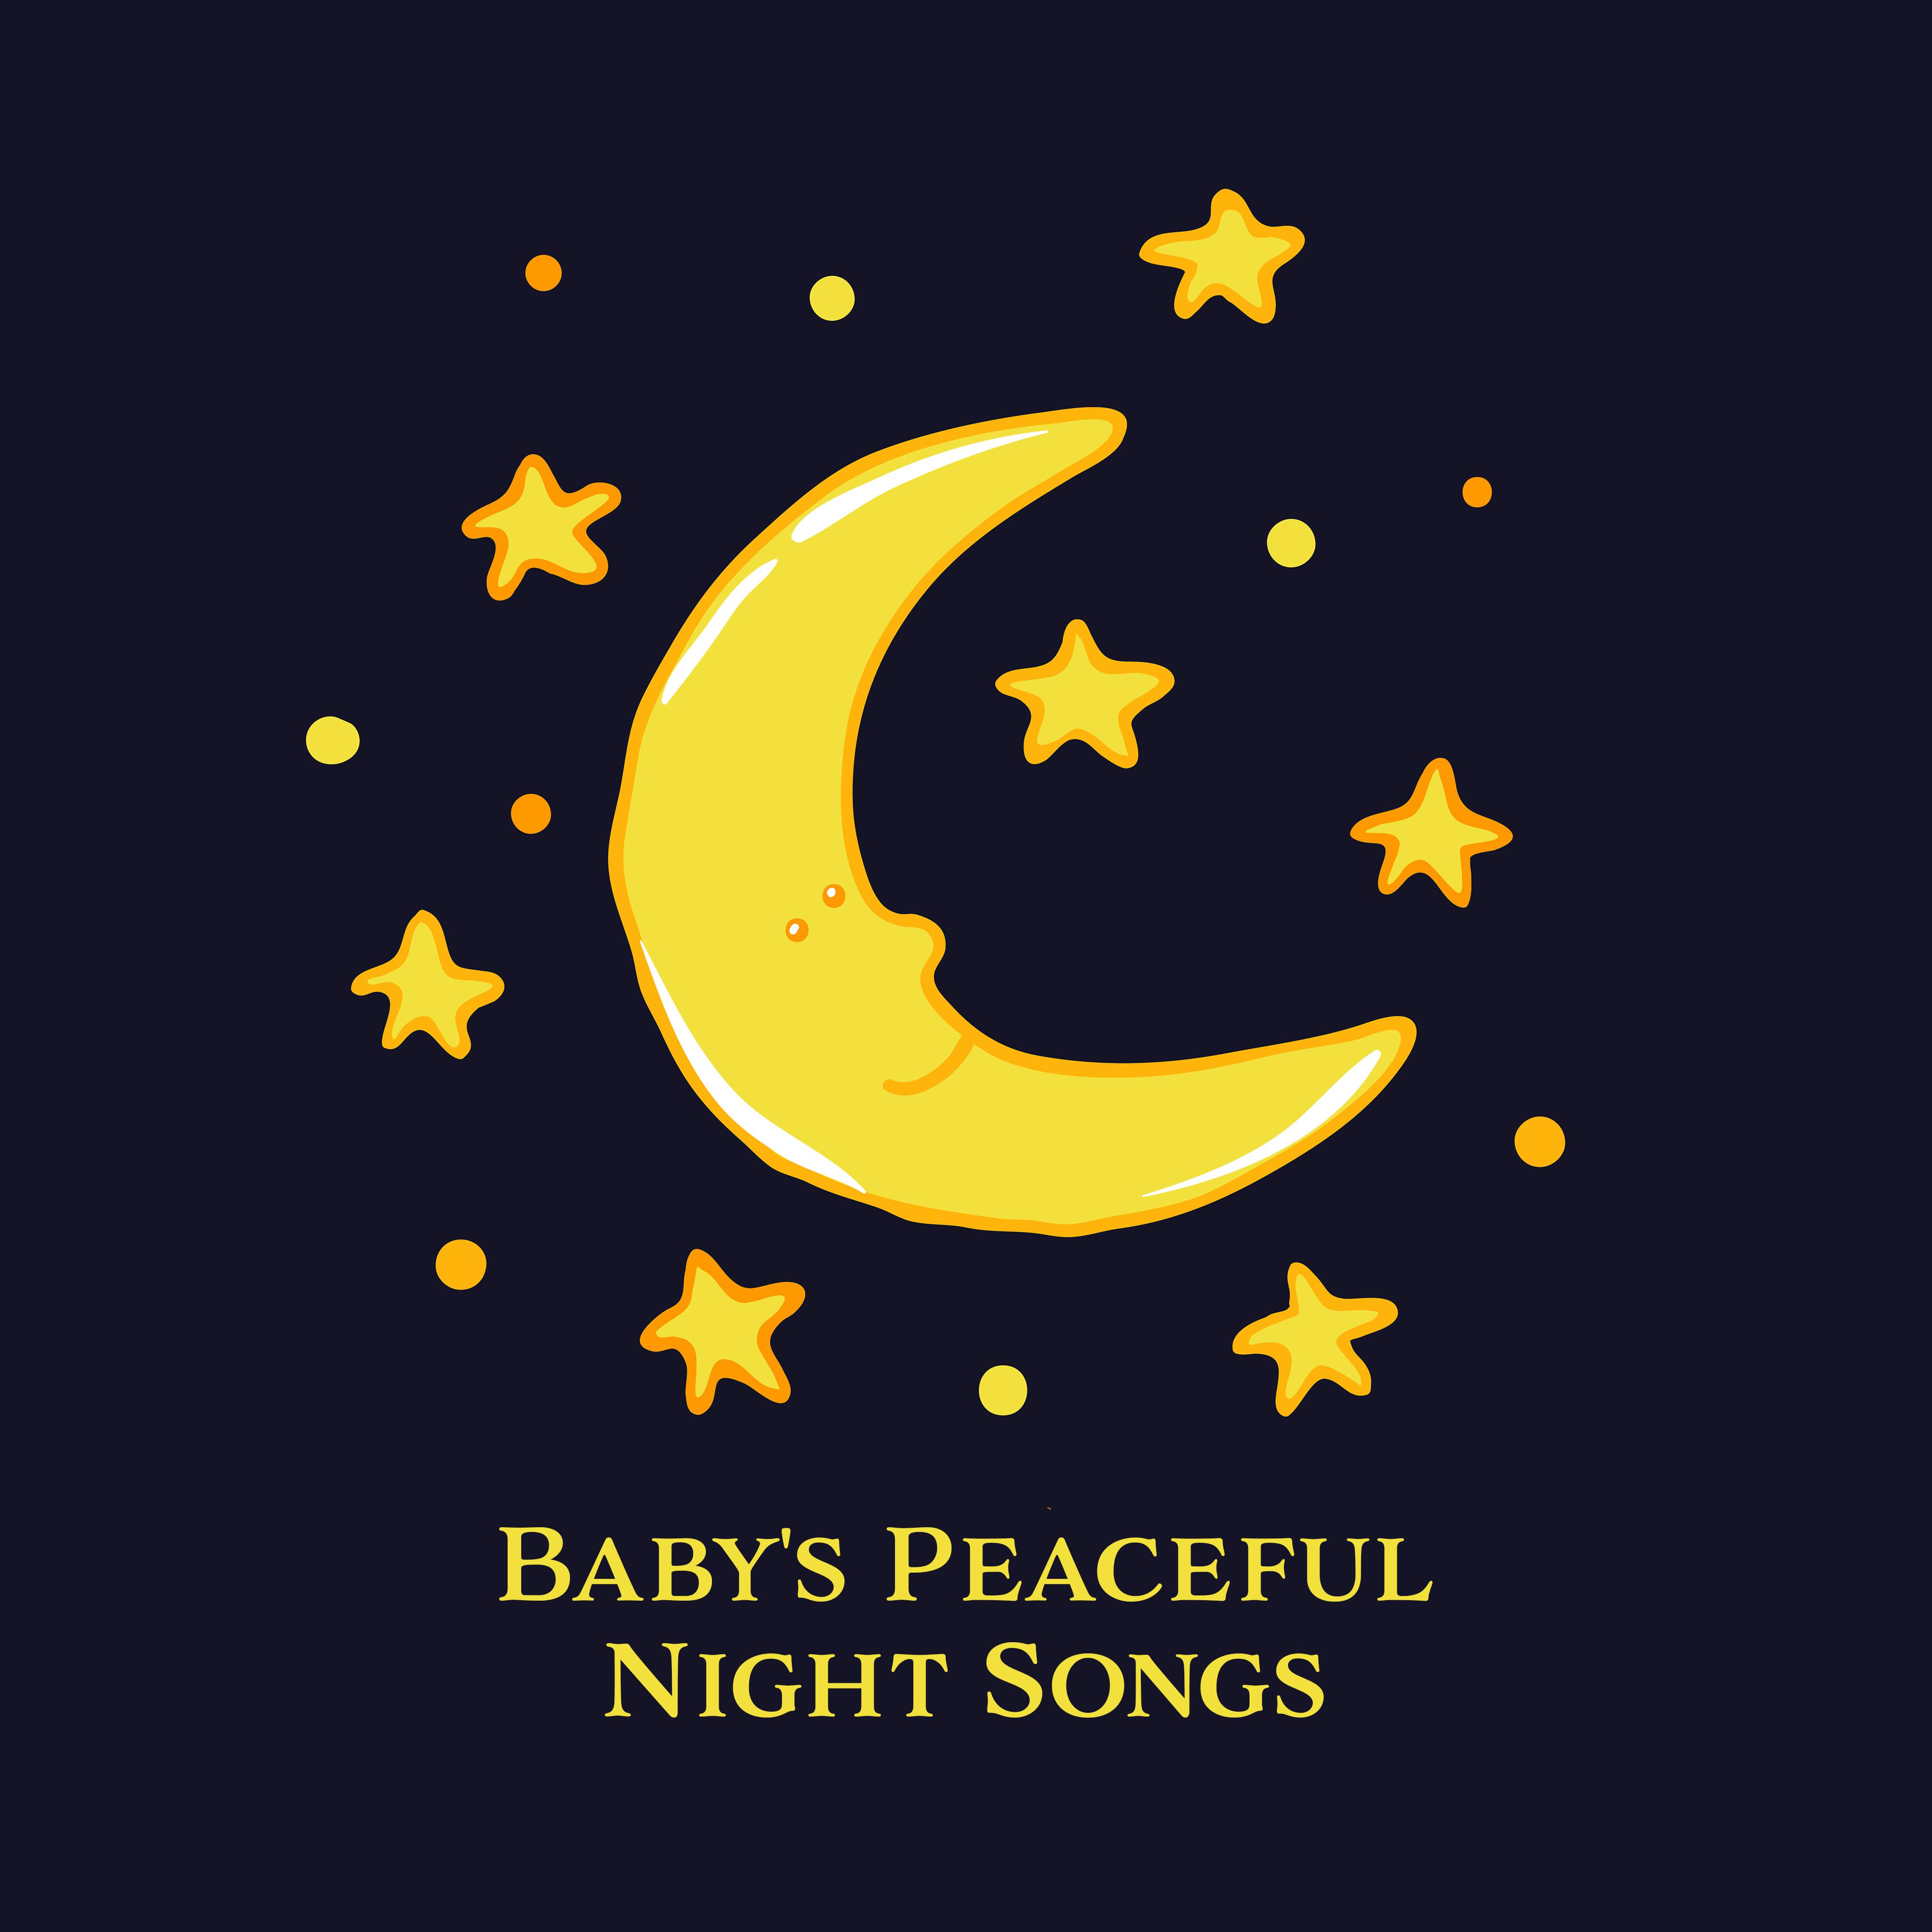 Baby's Peaceful Night Songs: 15 New Age Tracks for Perfect Baby Sleep, Calming Down & Sleep Beautiful